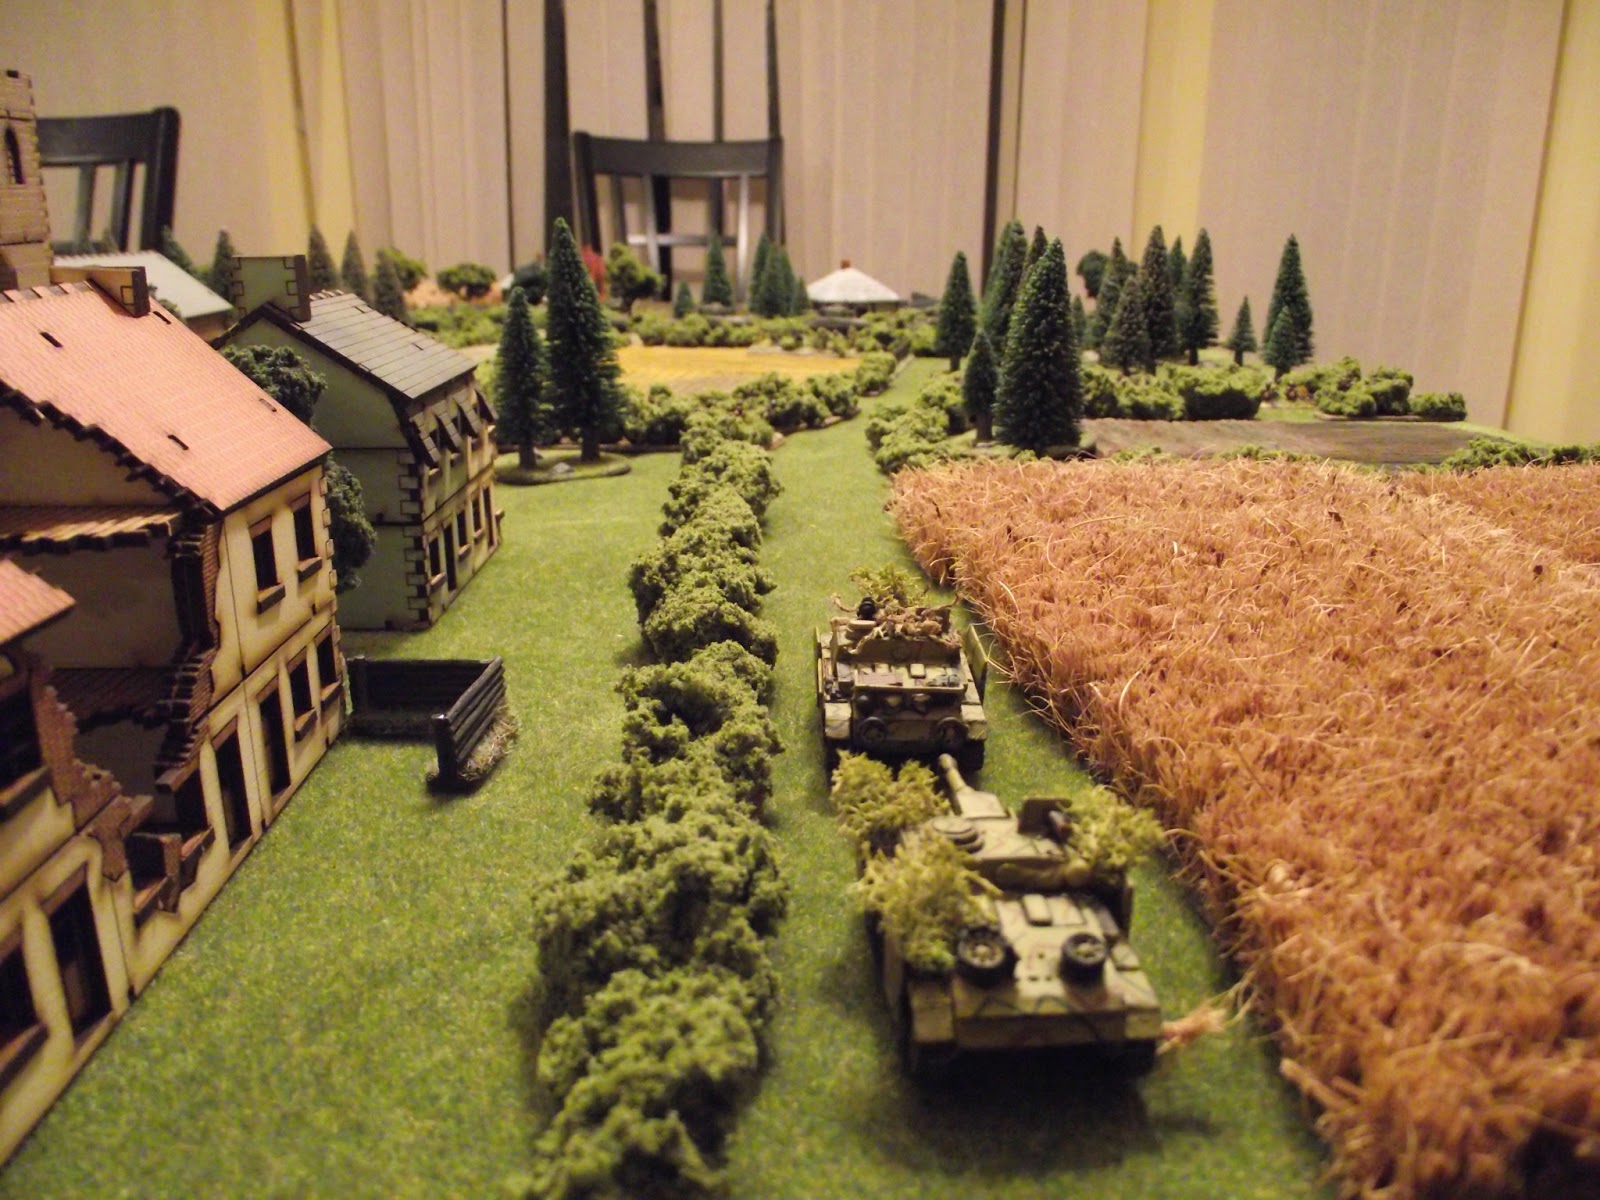   Turn 2:&nbsp; German reinforcements arrive in the form of two StuGs.  